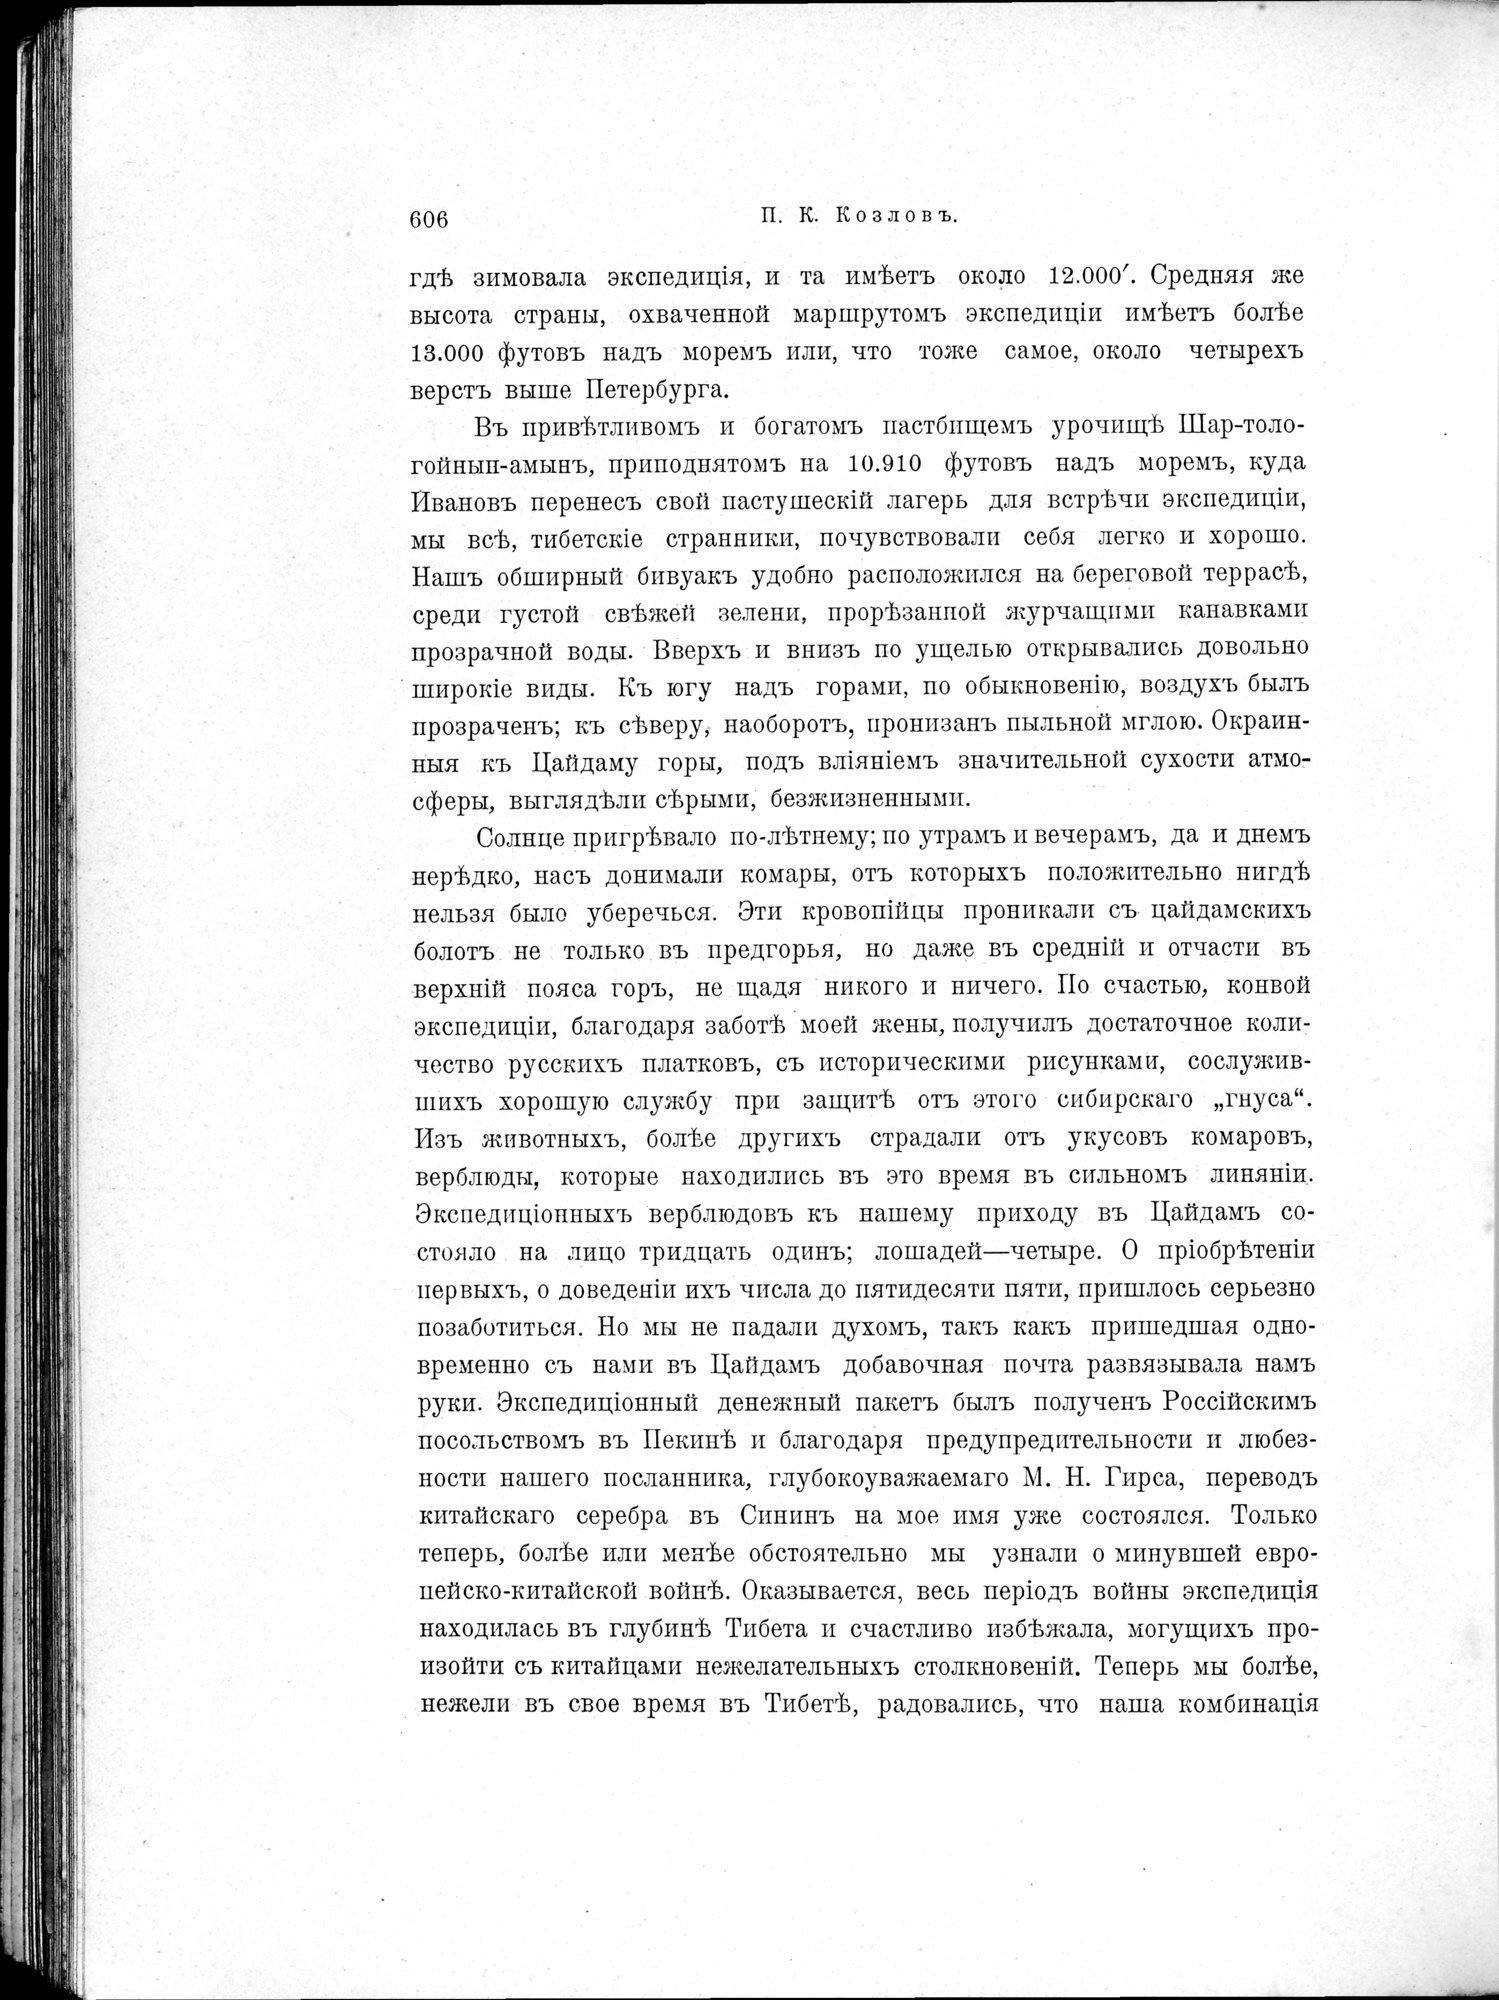 Mongoliia i Kam : vol.2 / Page 434 (Grayscale High Resolution Image)